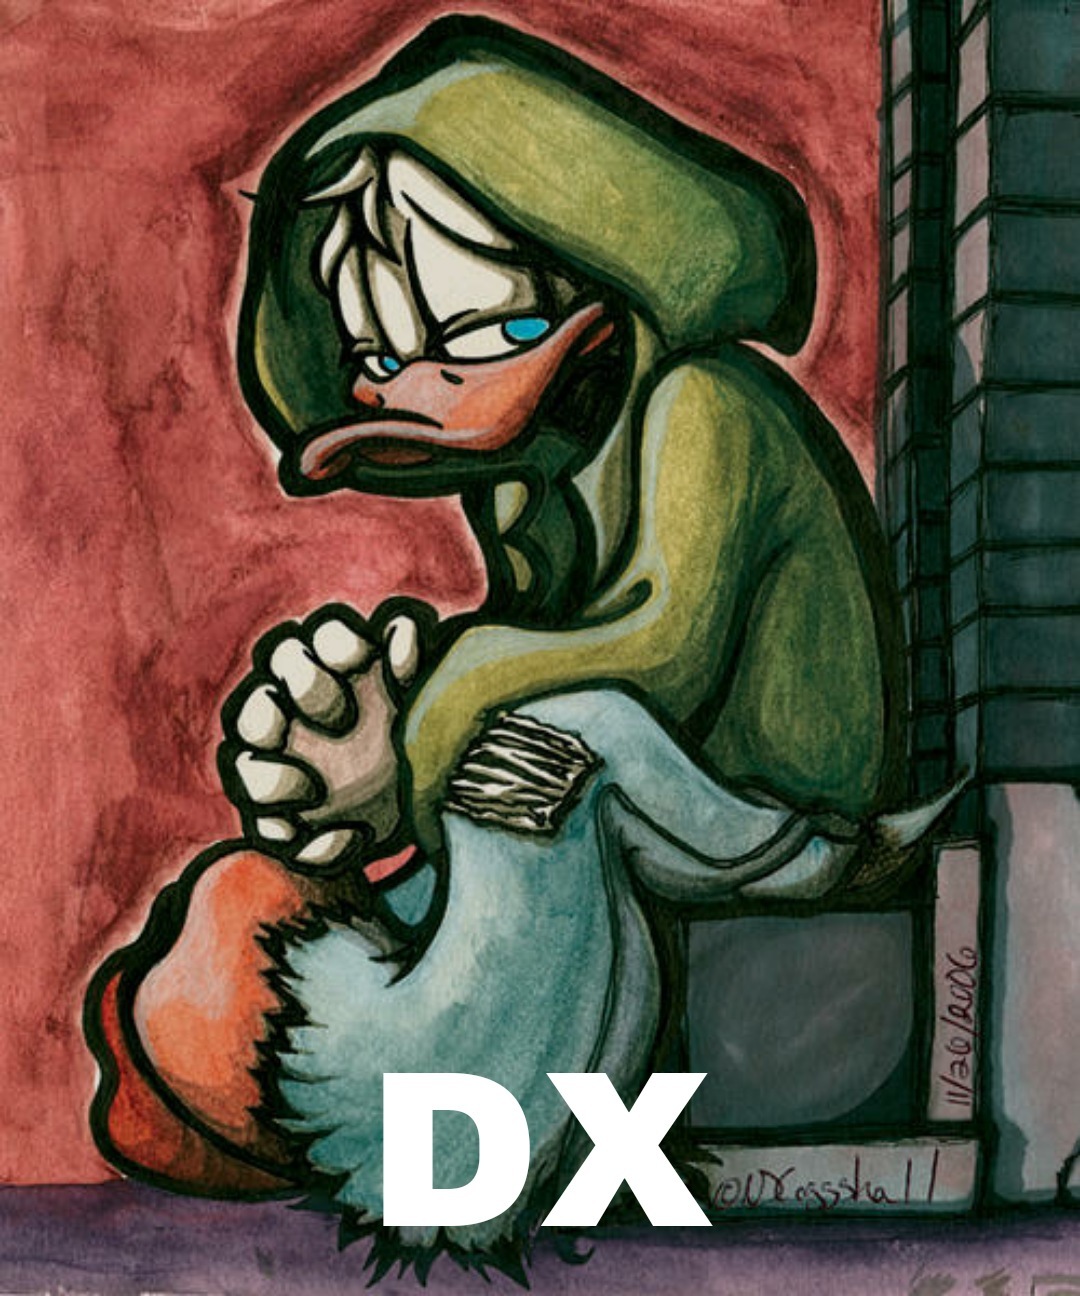 DX - meme